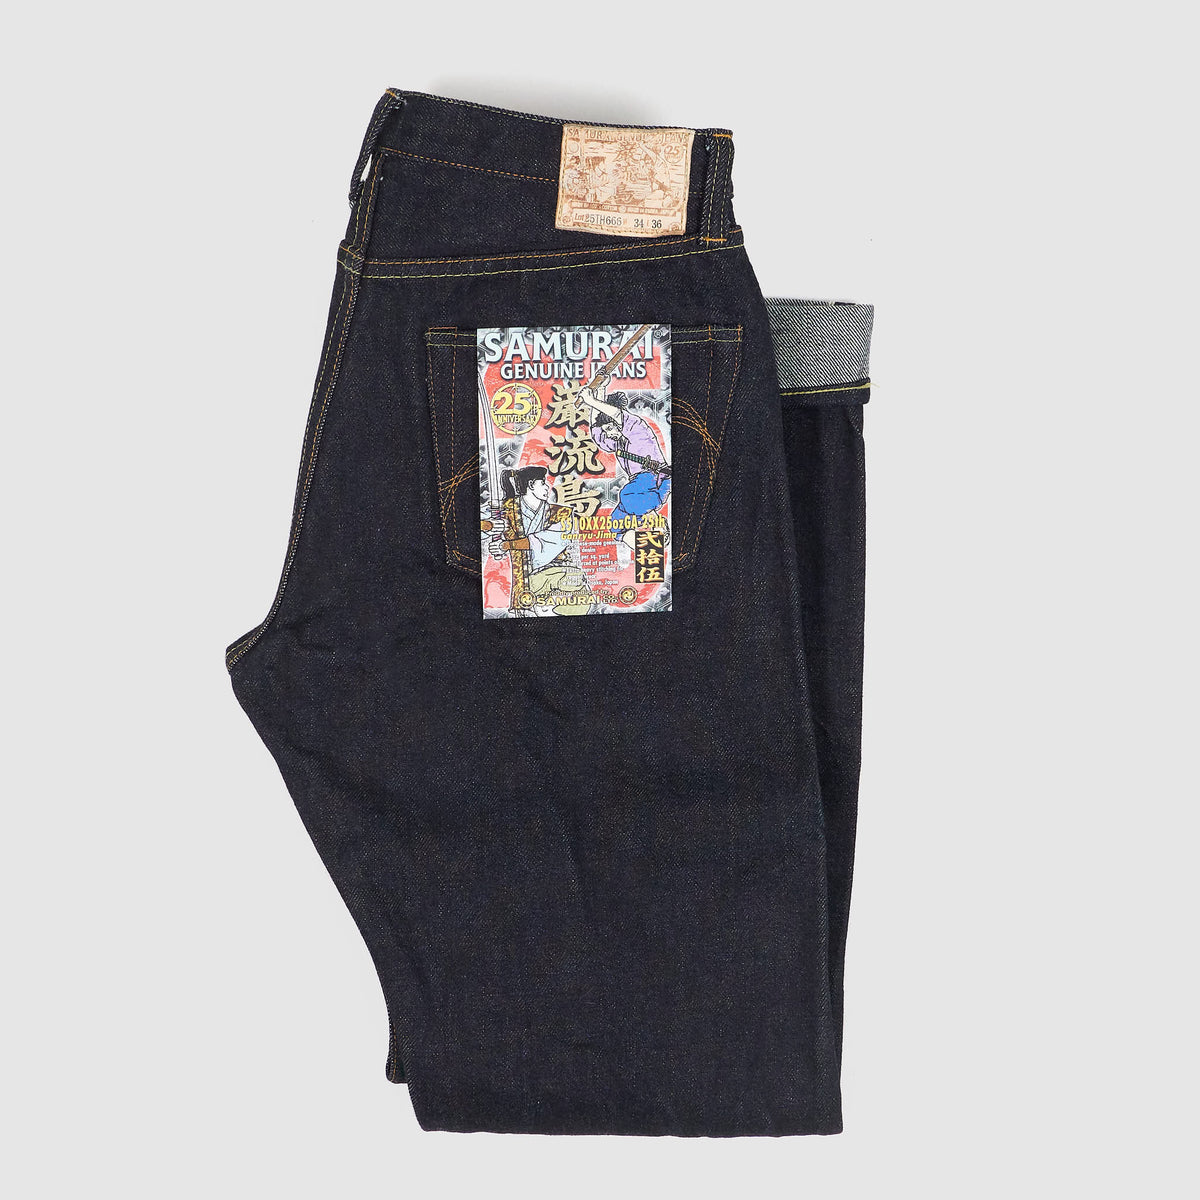 Samurai 5-Pocket 25th. Anniversary Five Pocket Selvage Jeans 25oz.